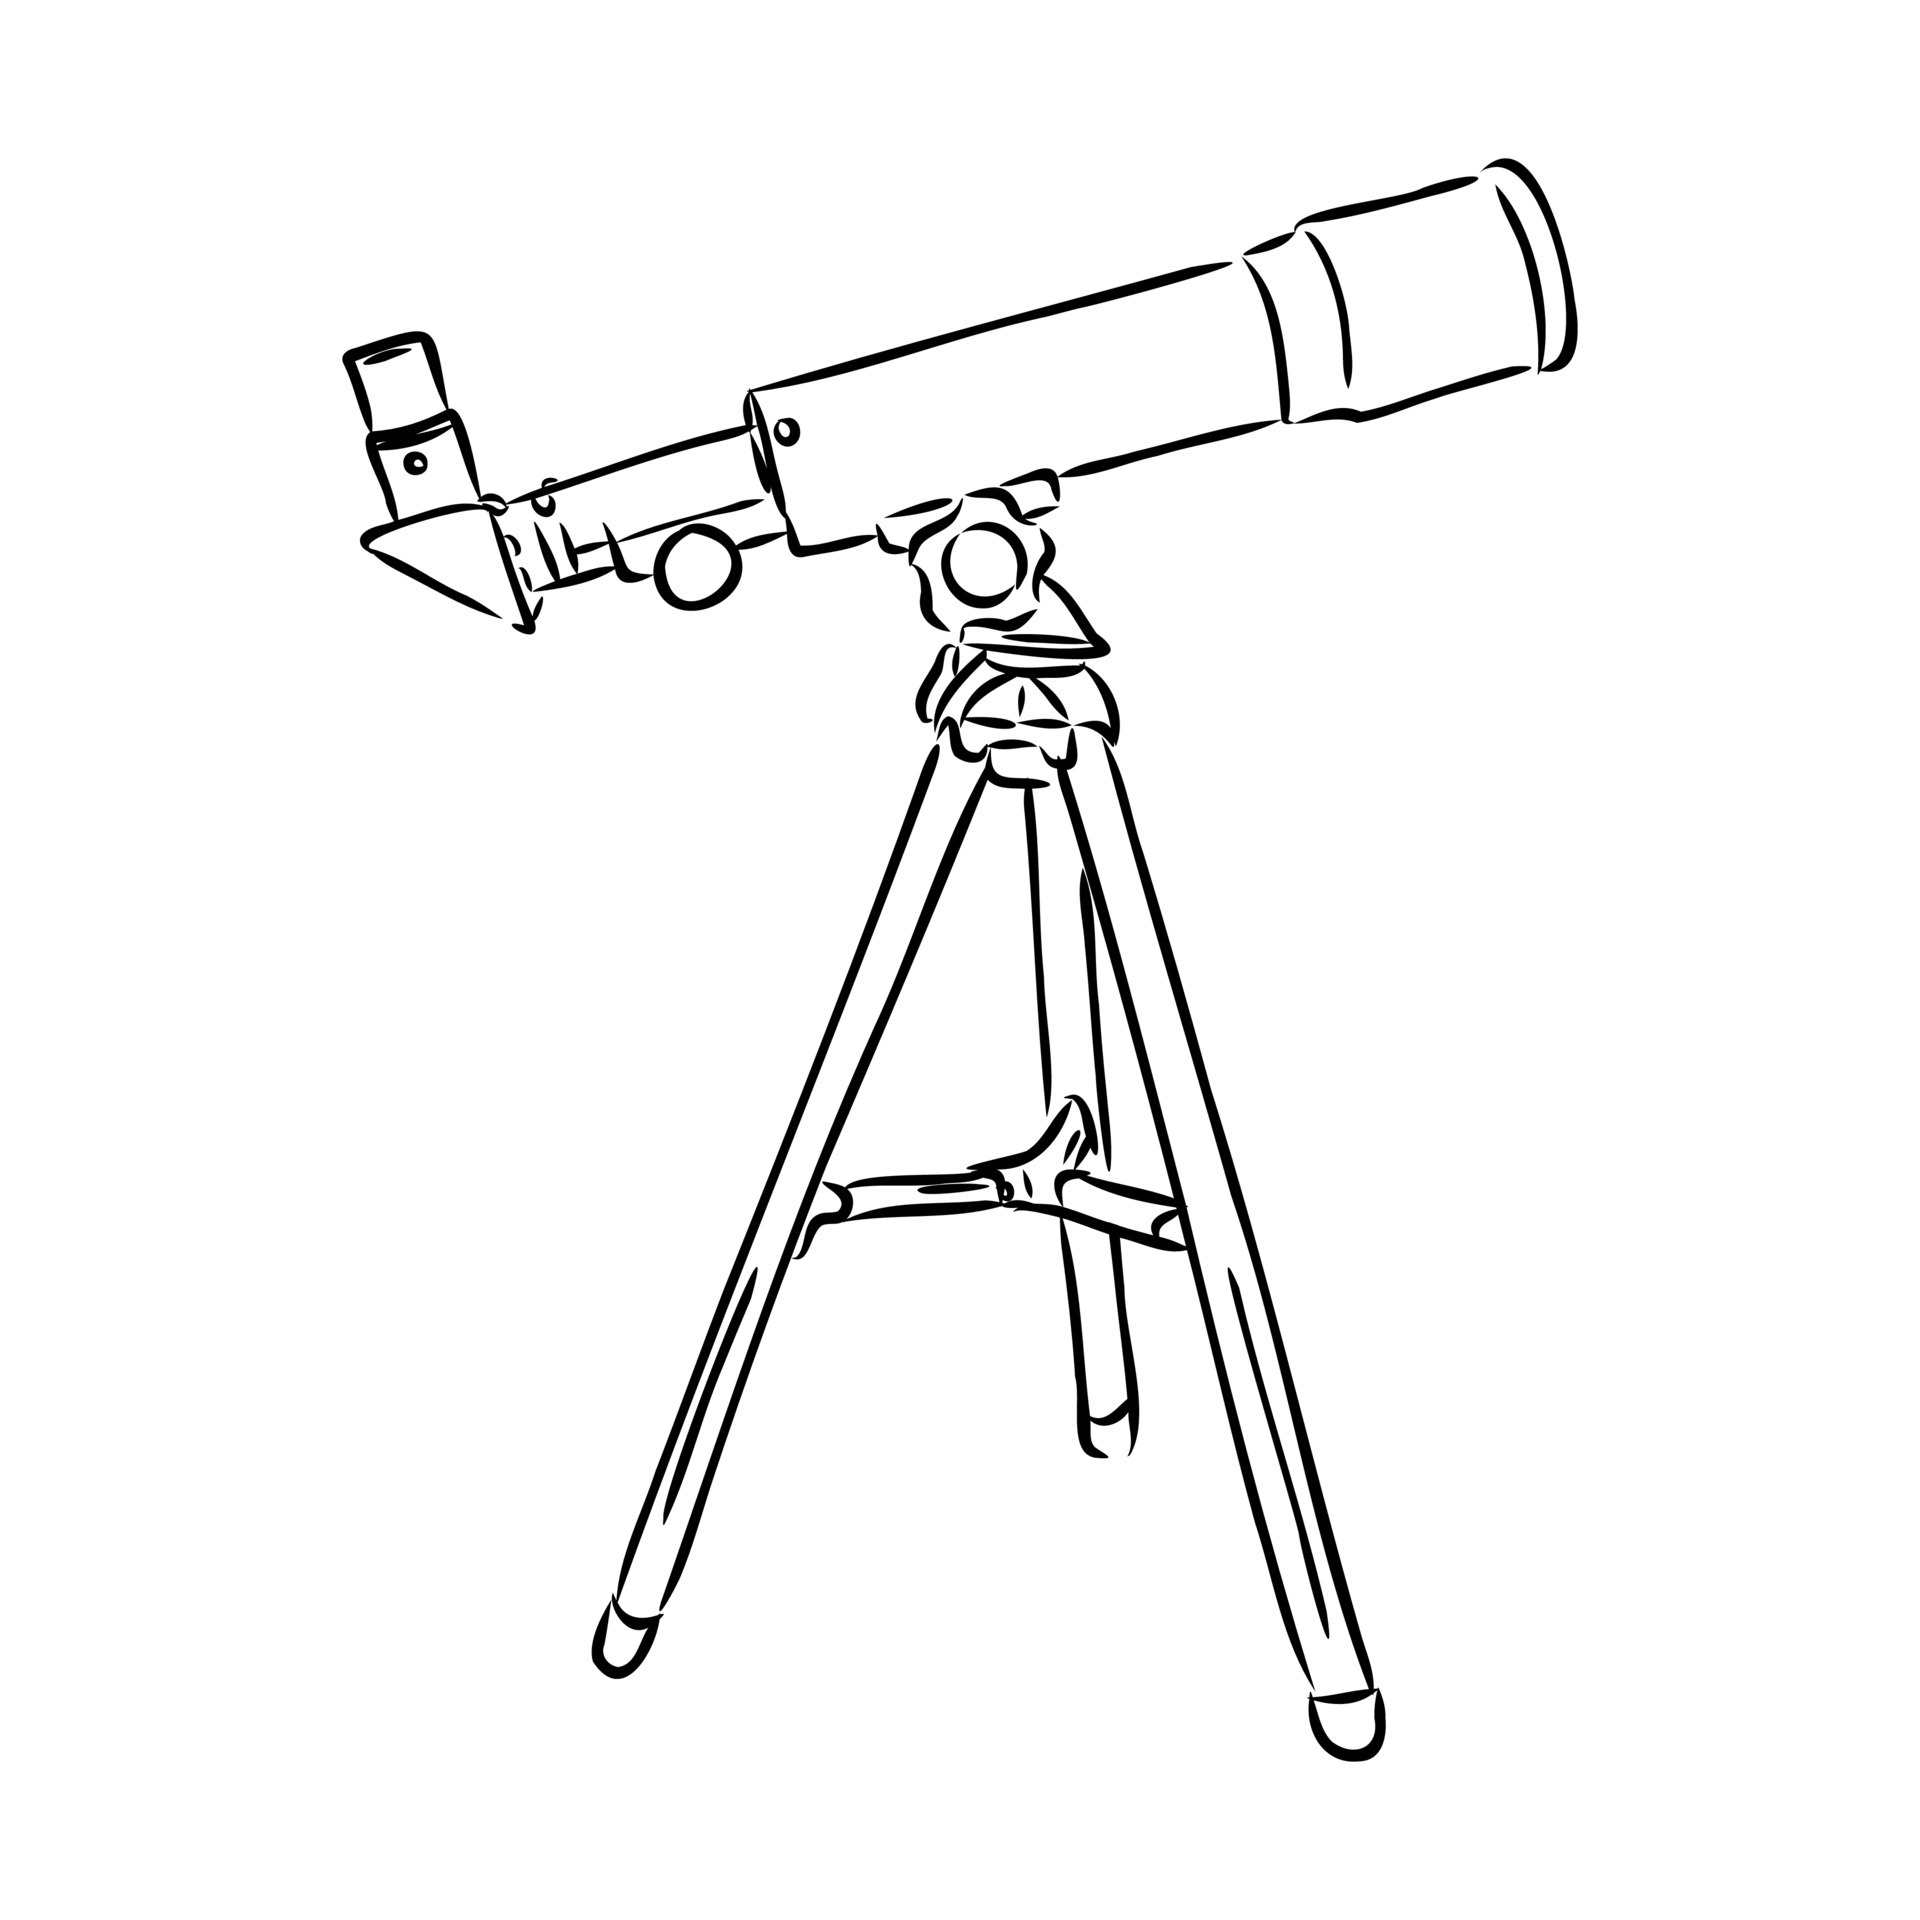 FileHubble Space Telescope Sketchjpg  Wikimedia Commons